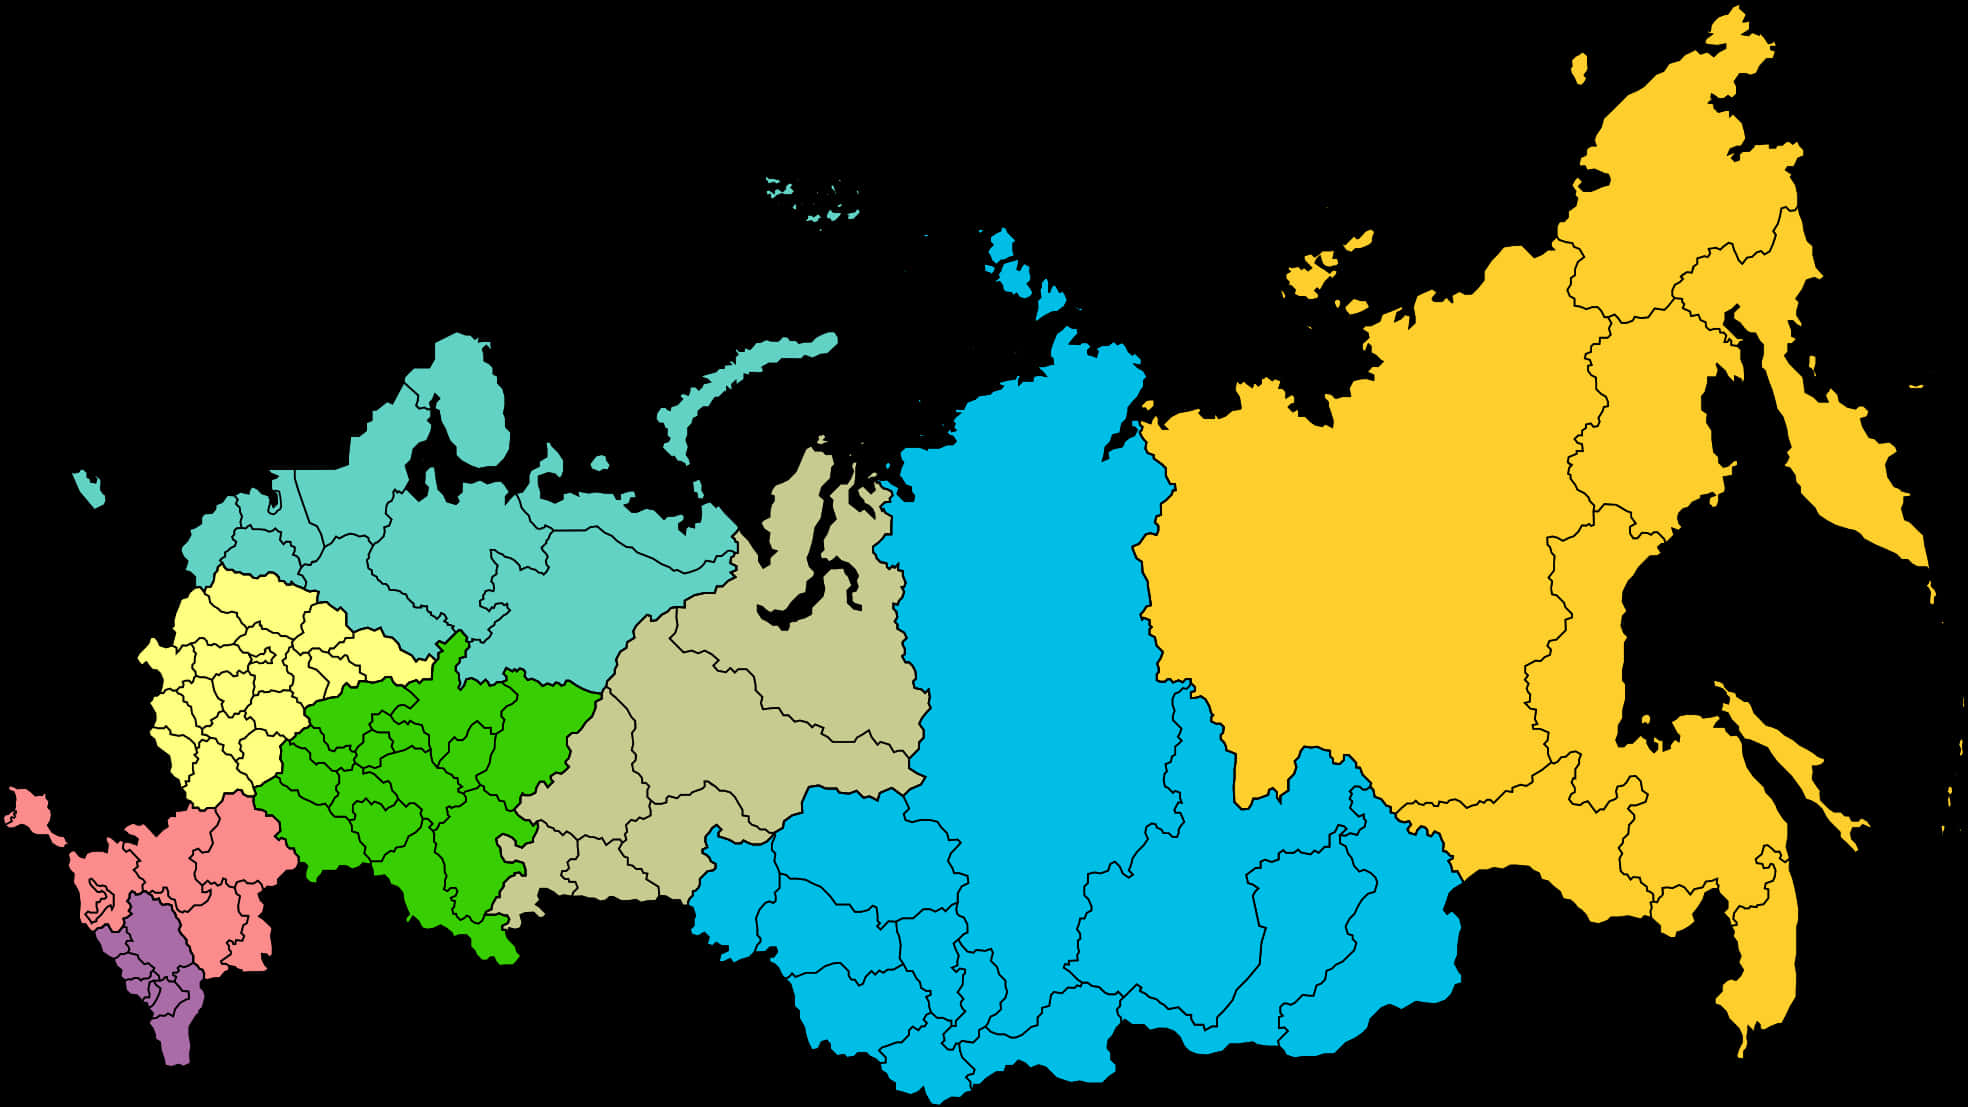 Colorful Political Mapof Russia